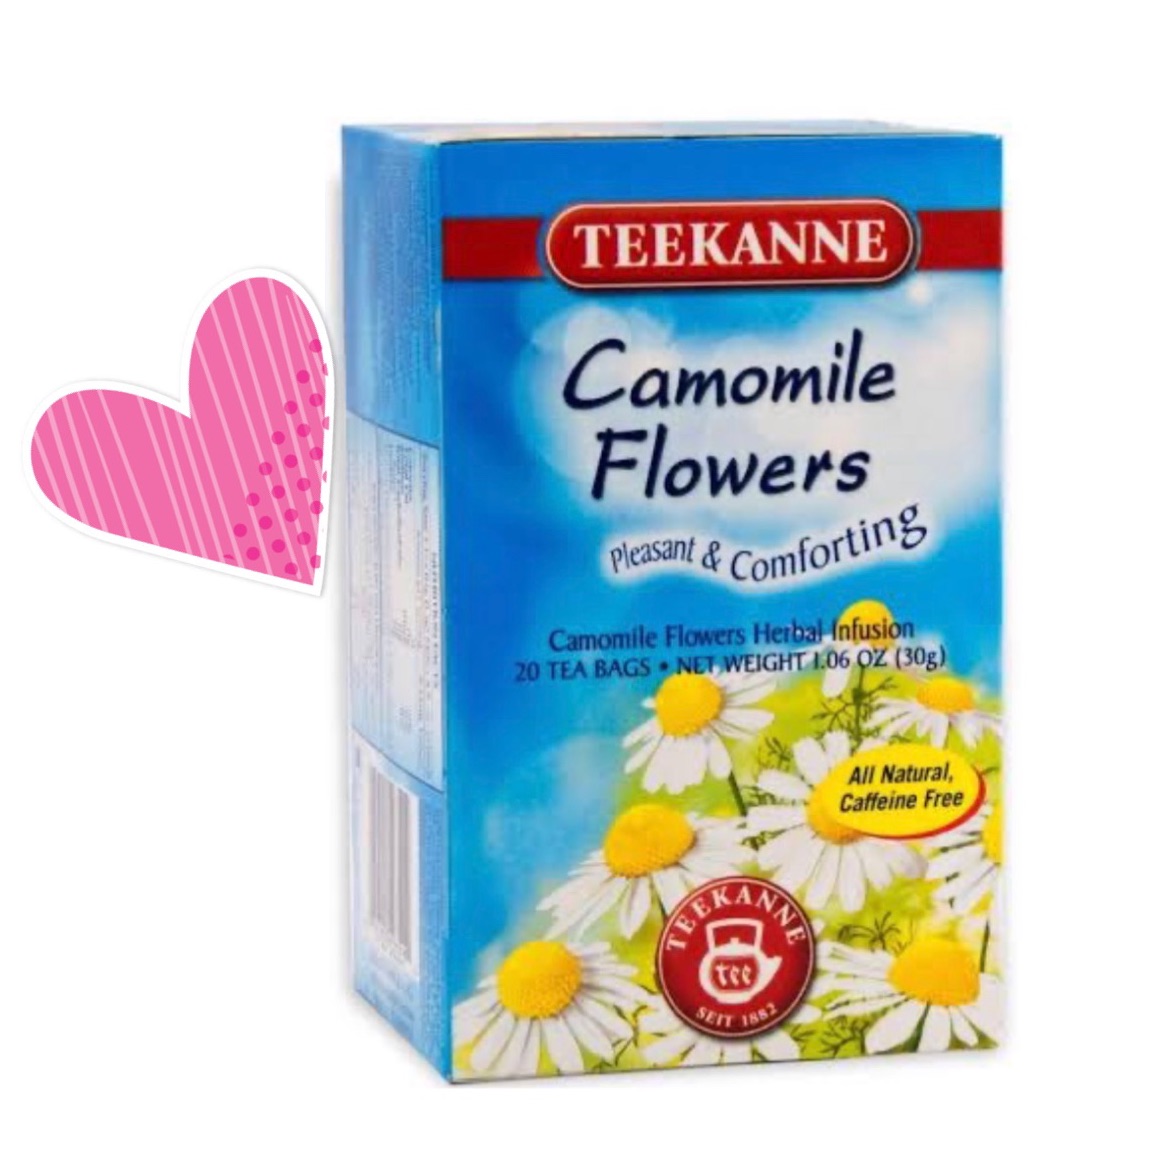 Teekanne Tea Germany Tea ?? 100% Natural caffeine free ชา จาก ธรรมชาติ ไม่มีคาแฟอีน สินค้าจาก เยอรมัน Camomiles Tea , 20 Tea Bags In stock ready to ship